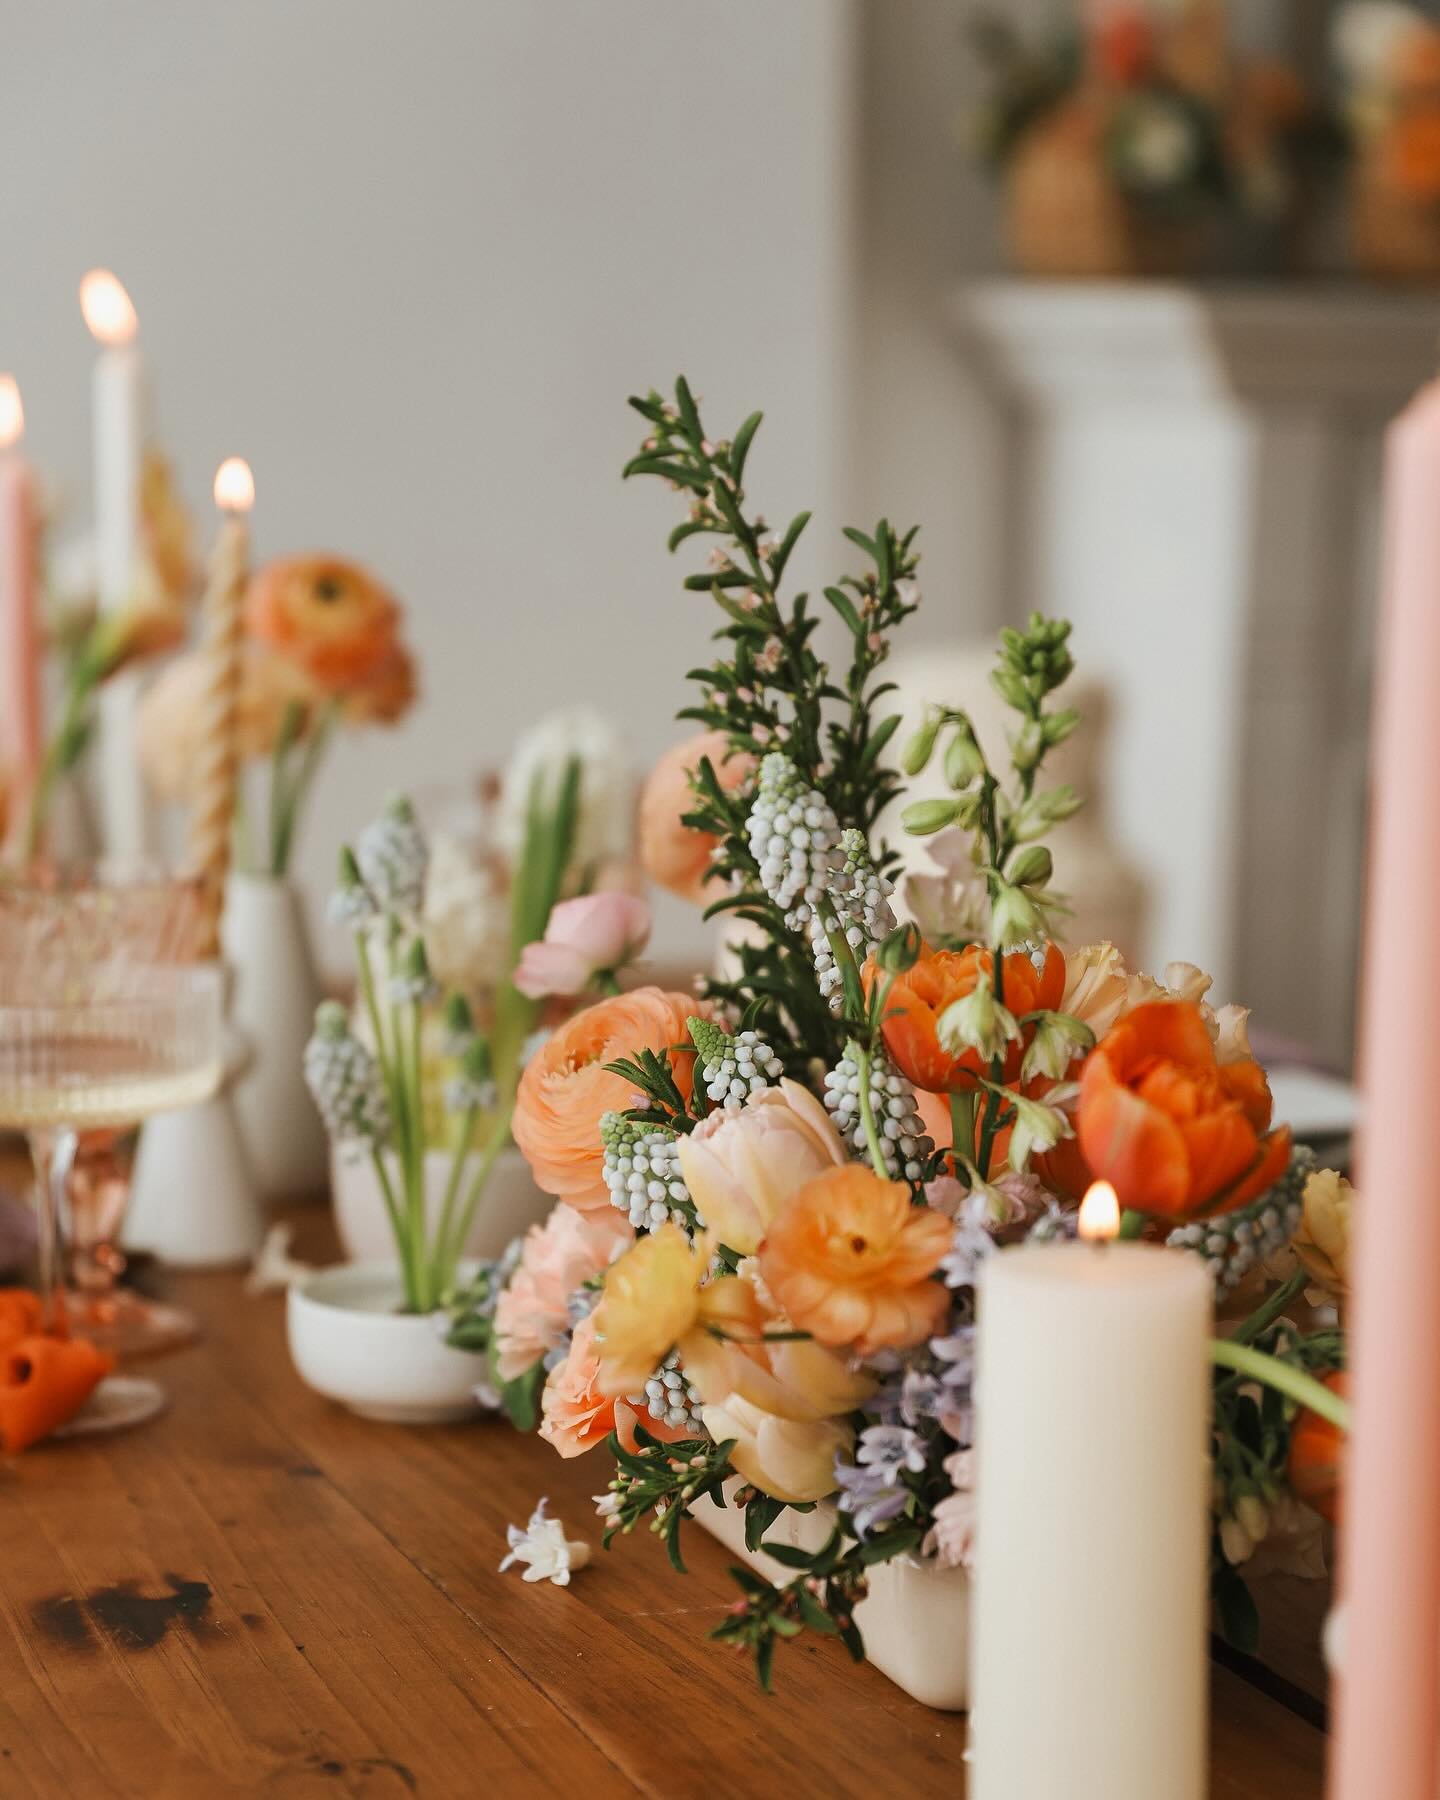 Let&rsquo;s give it up for this whimsical floralscape from @ivyoaksdesignco! 

@katiehawkins.co
@courtlphoto
@ivyoaksdesign
@thesuite.ny

#weddingflowers #wedding #weddingflorals #bride #bridetobe #upstatenywedding #saratogabride #saratogawedding #st